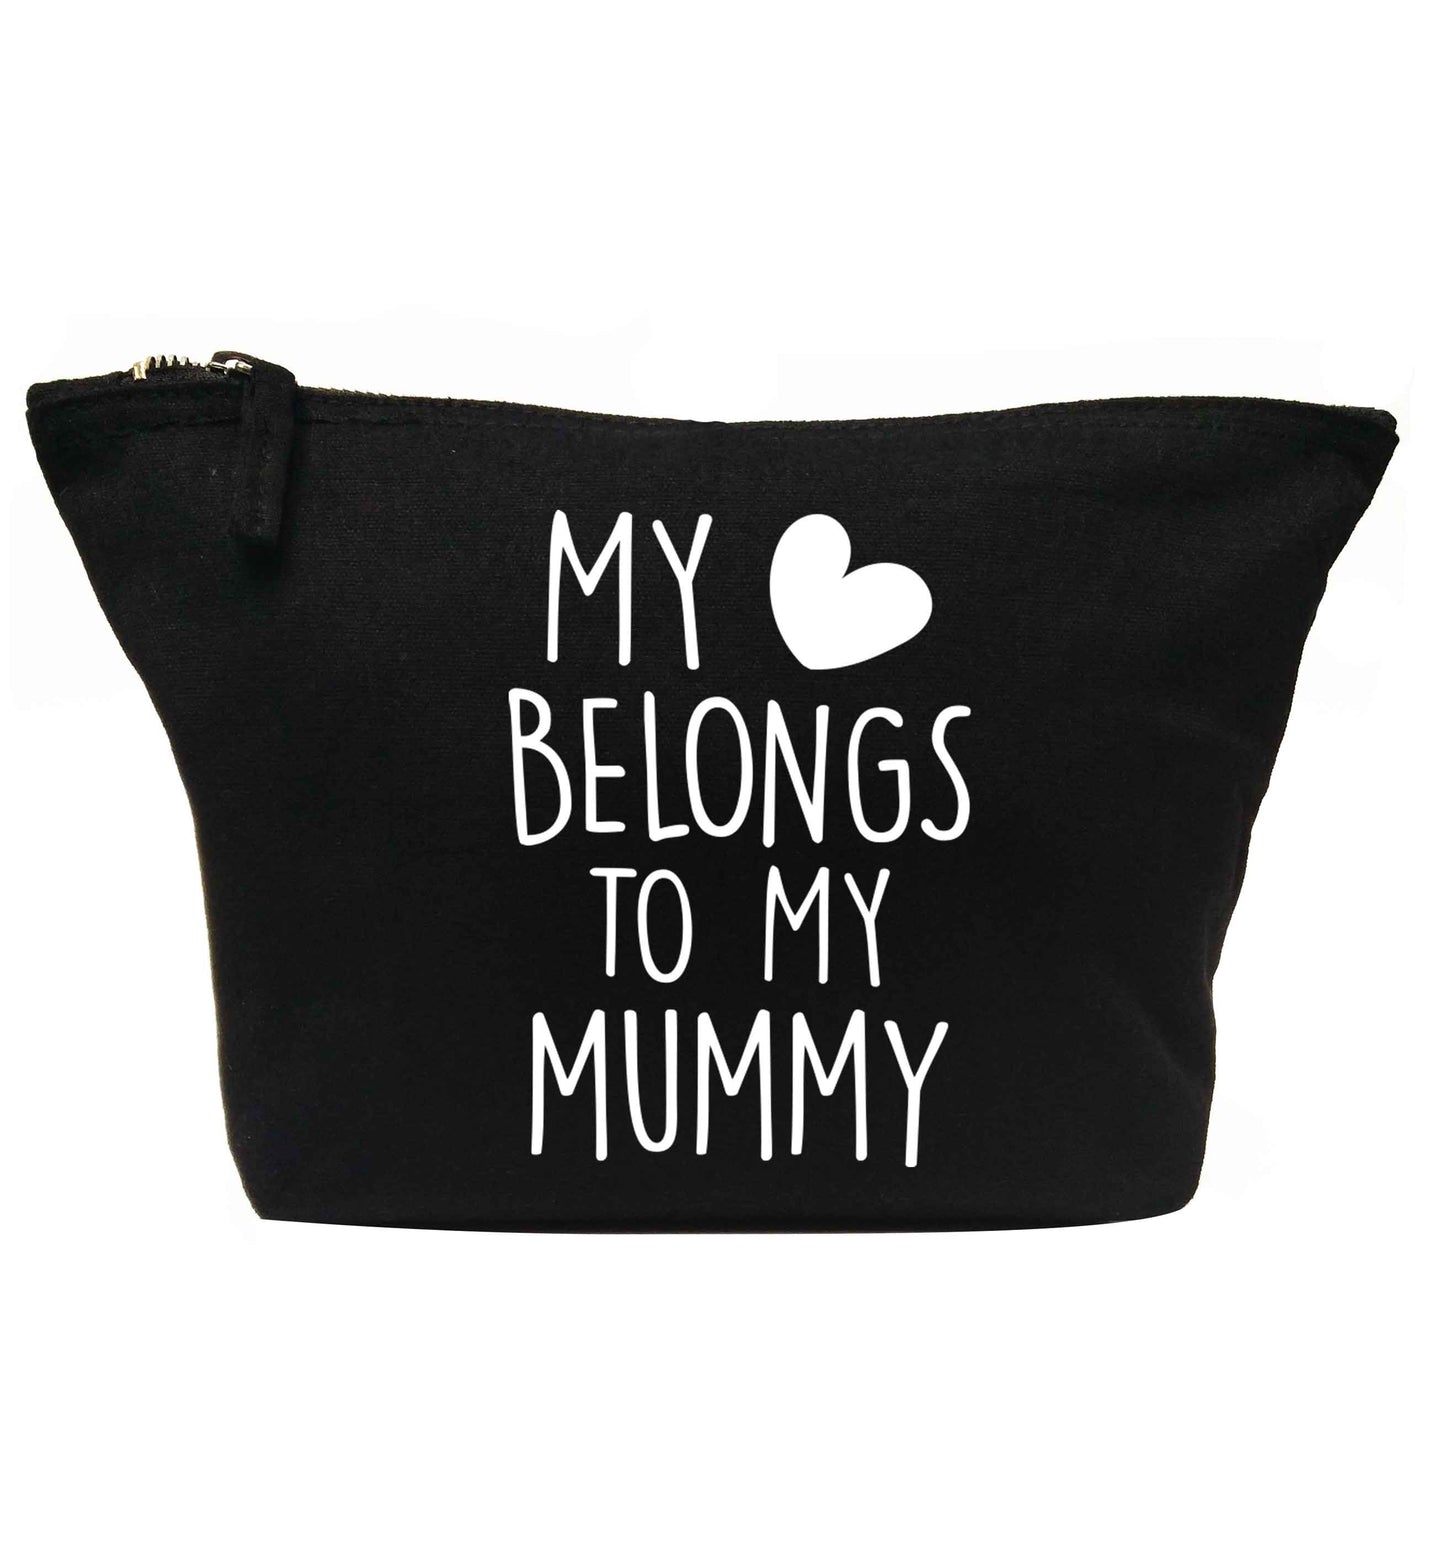 My heart belongs to my mummy | Makeup / wash bag